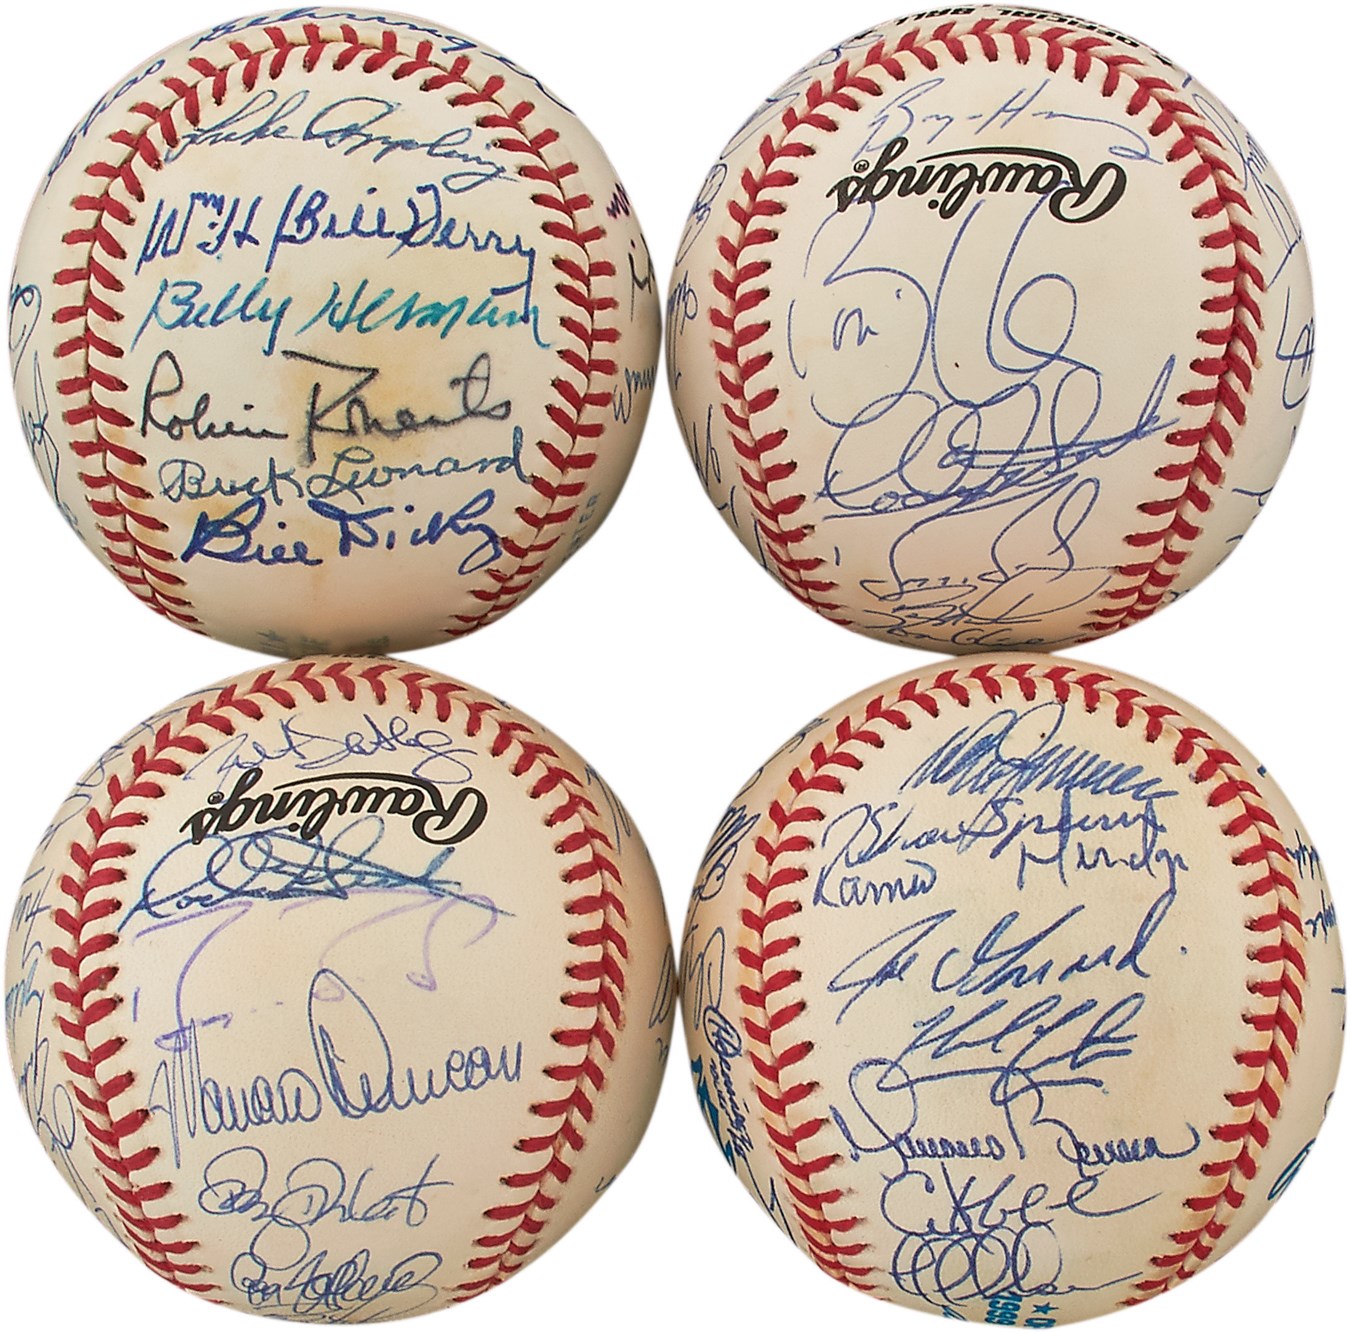 Baseball Autographs - Interesting Hall of Fame, All-Star and Team-Signed Baseballs (4)